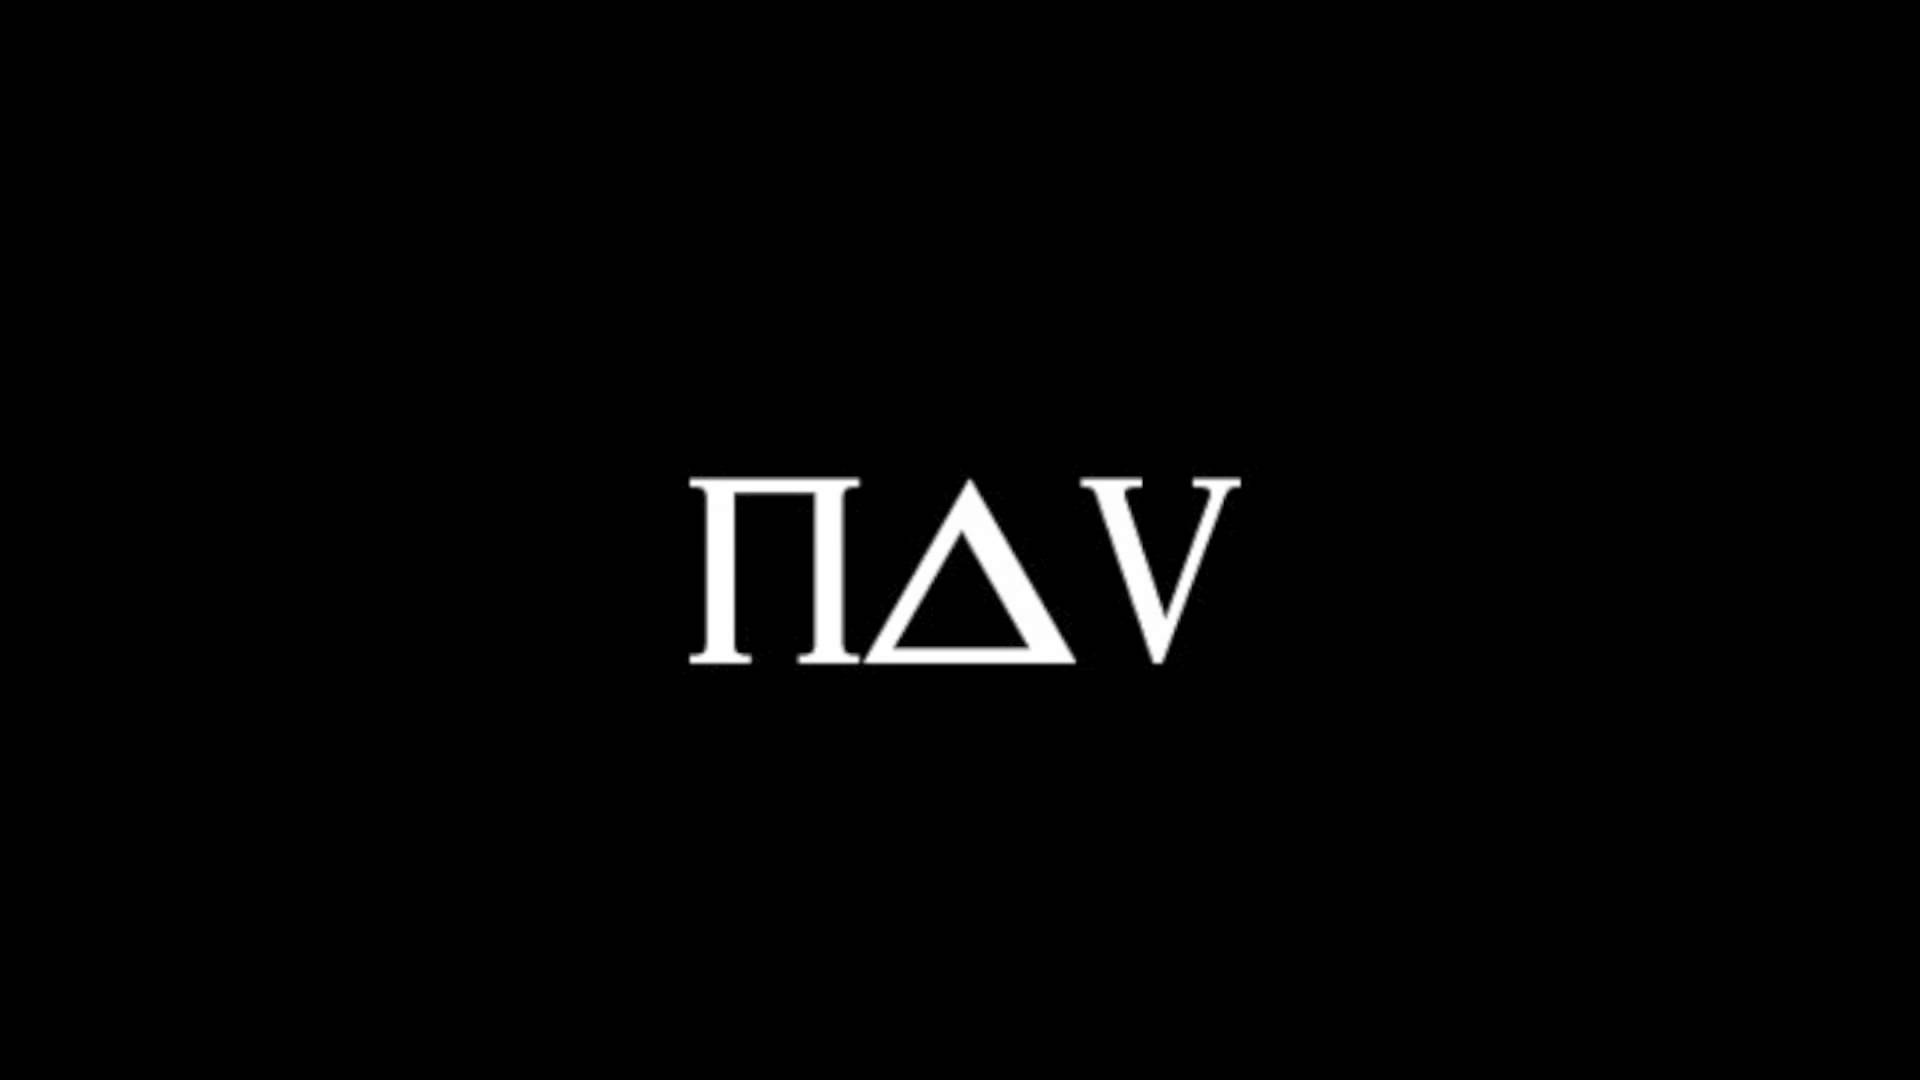 Nav Logo Wallpapers - Top Free Nav Logo Backgrounds - WallpaperAccess